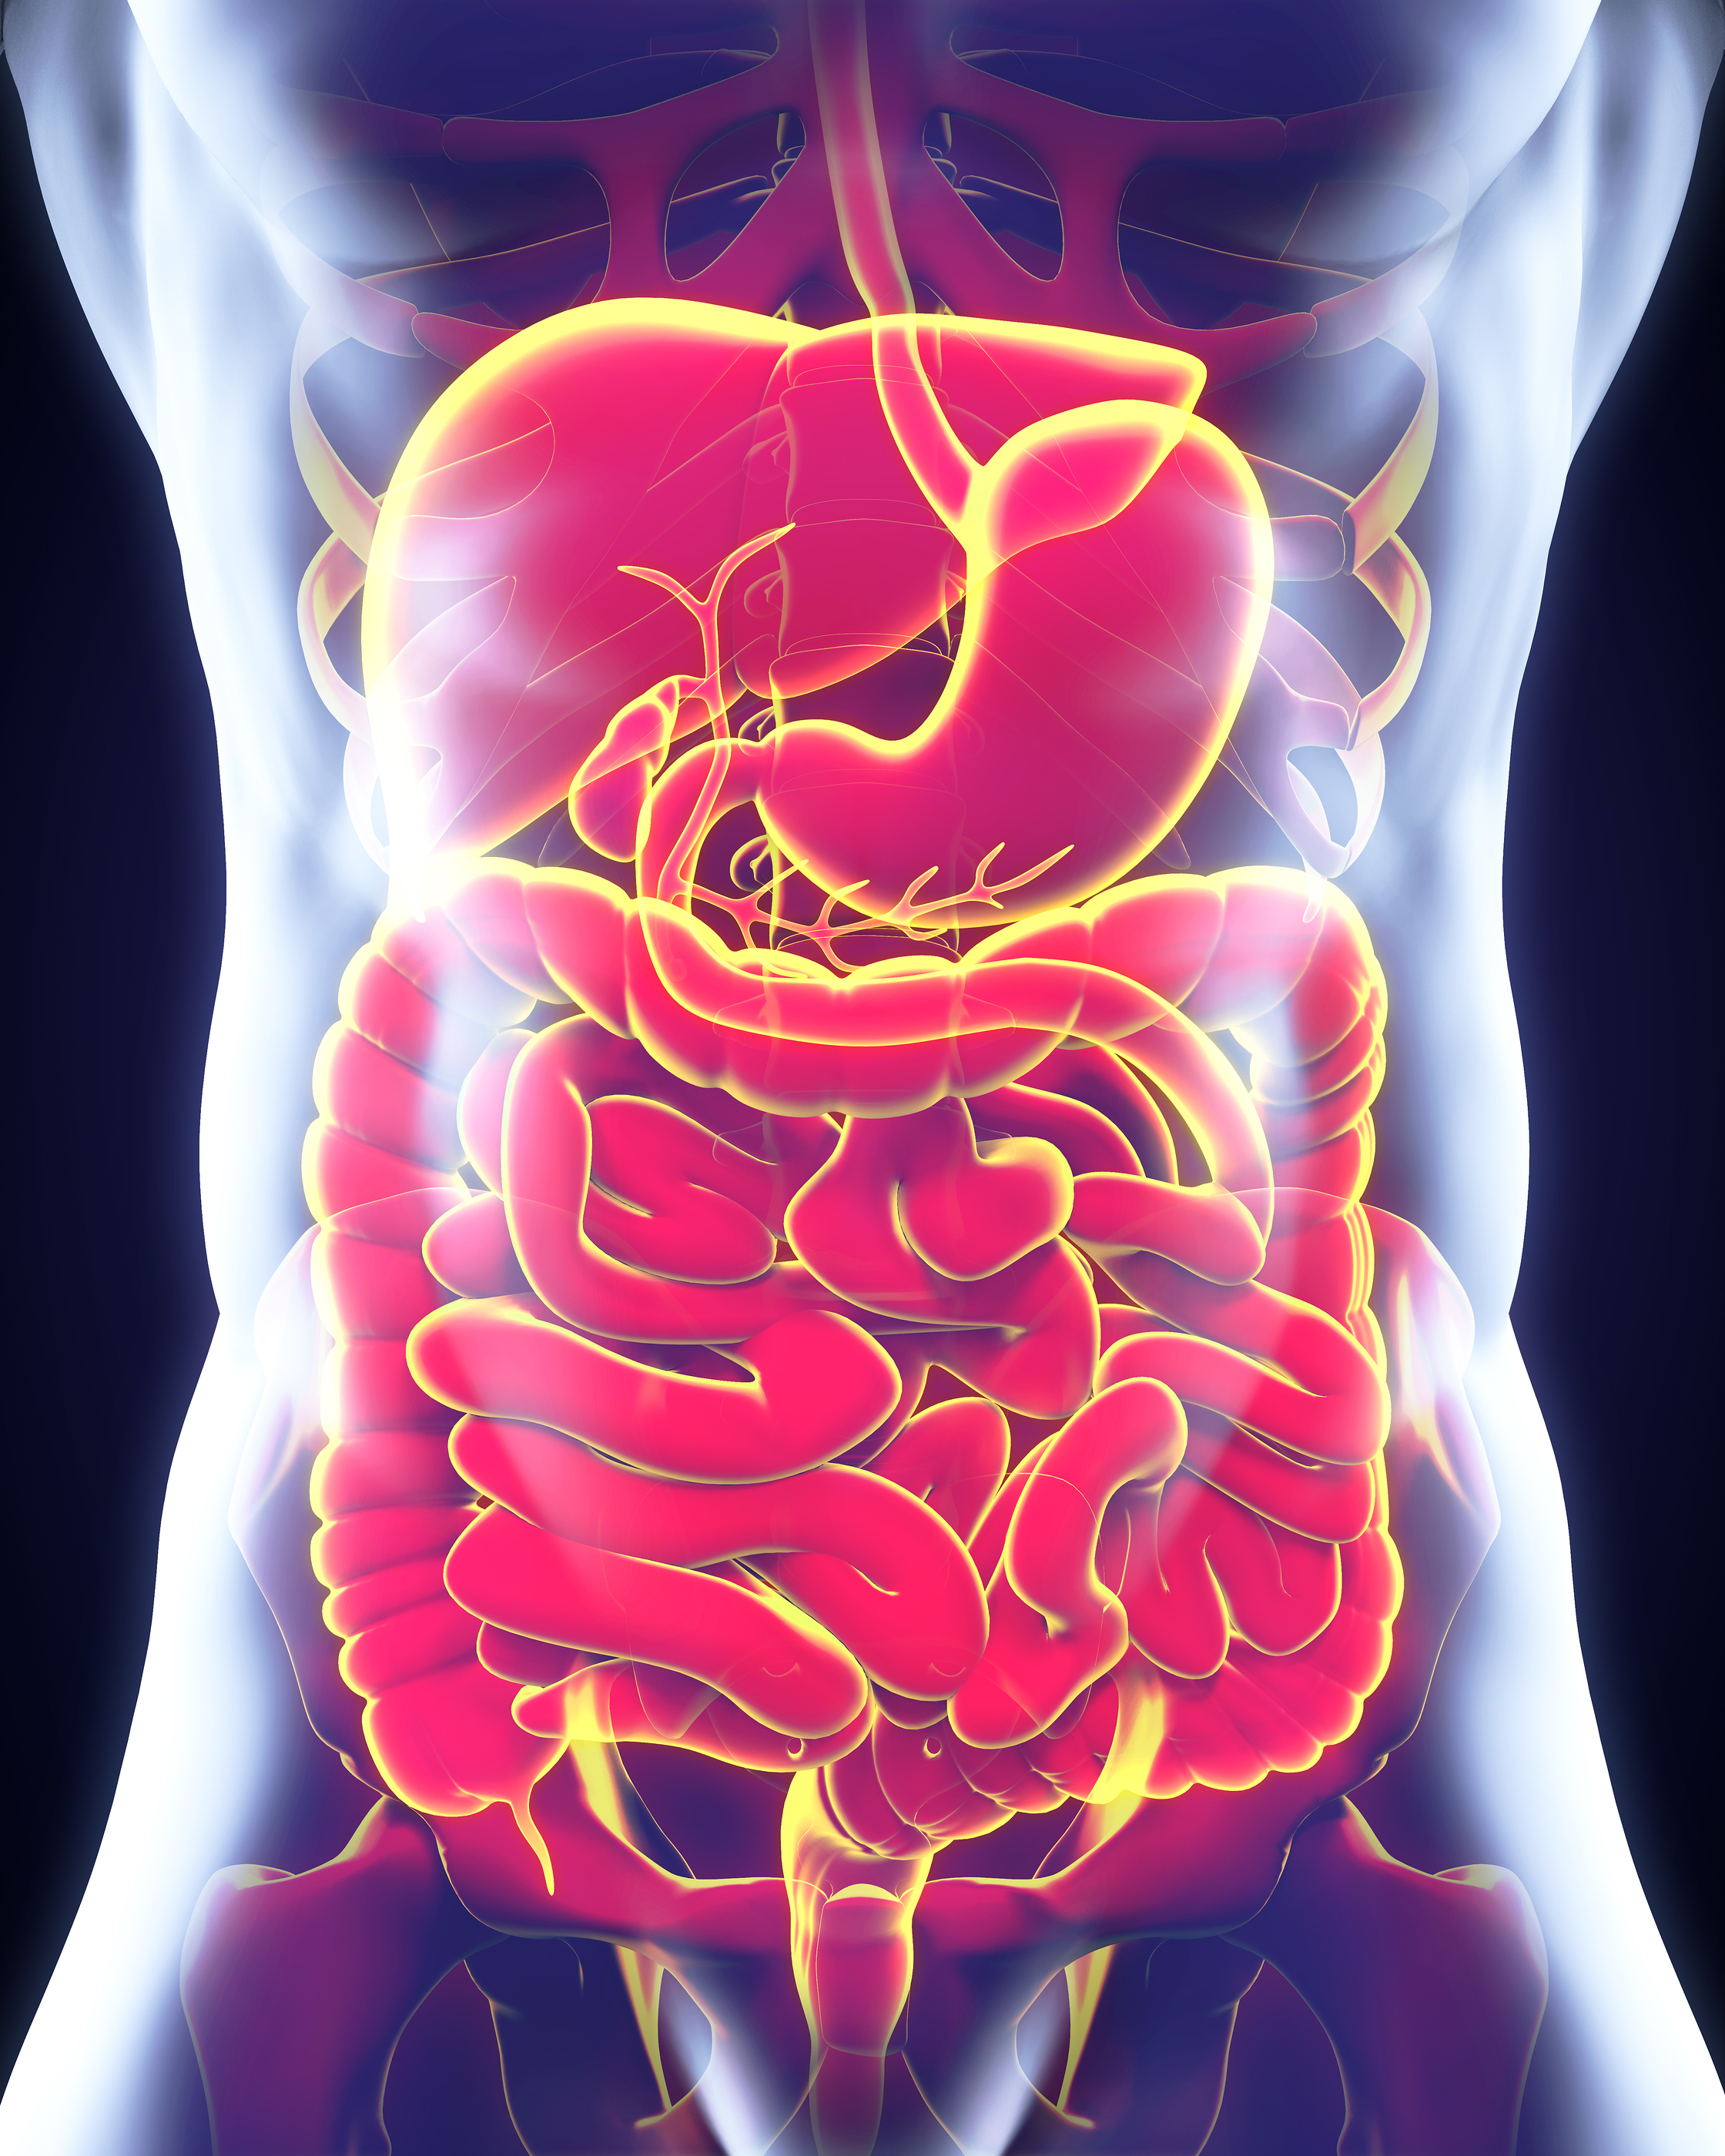 Human Digestive System